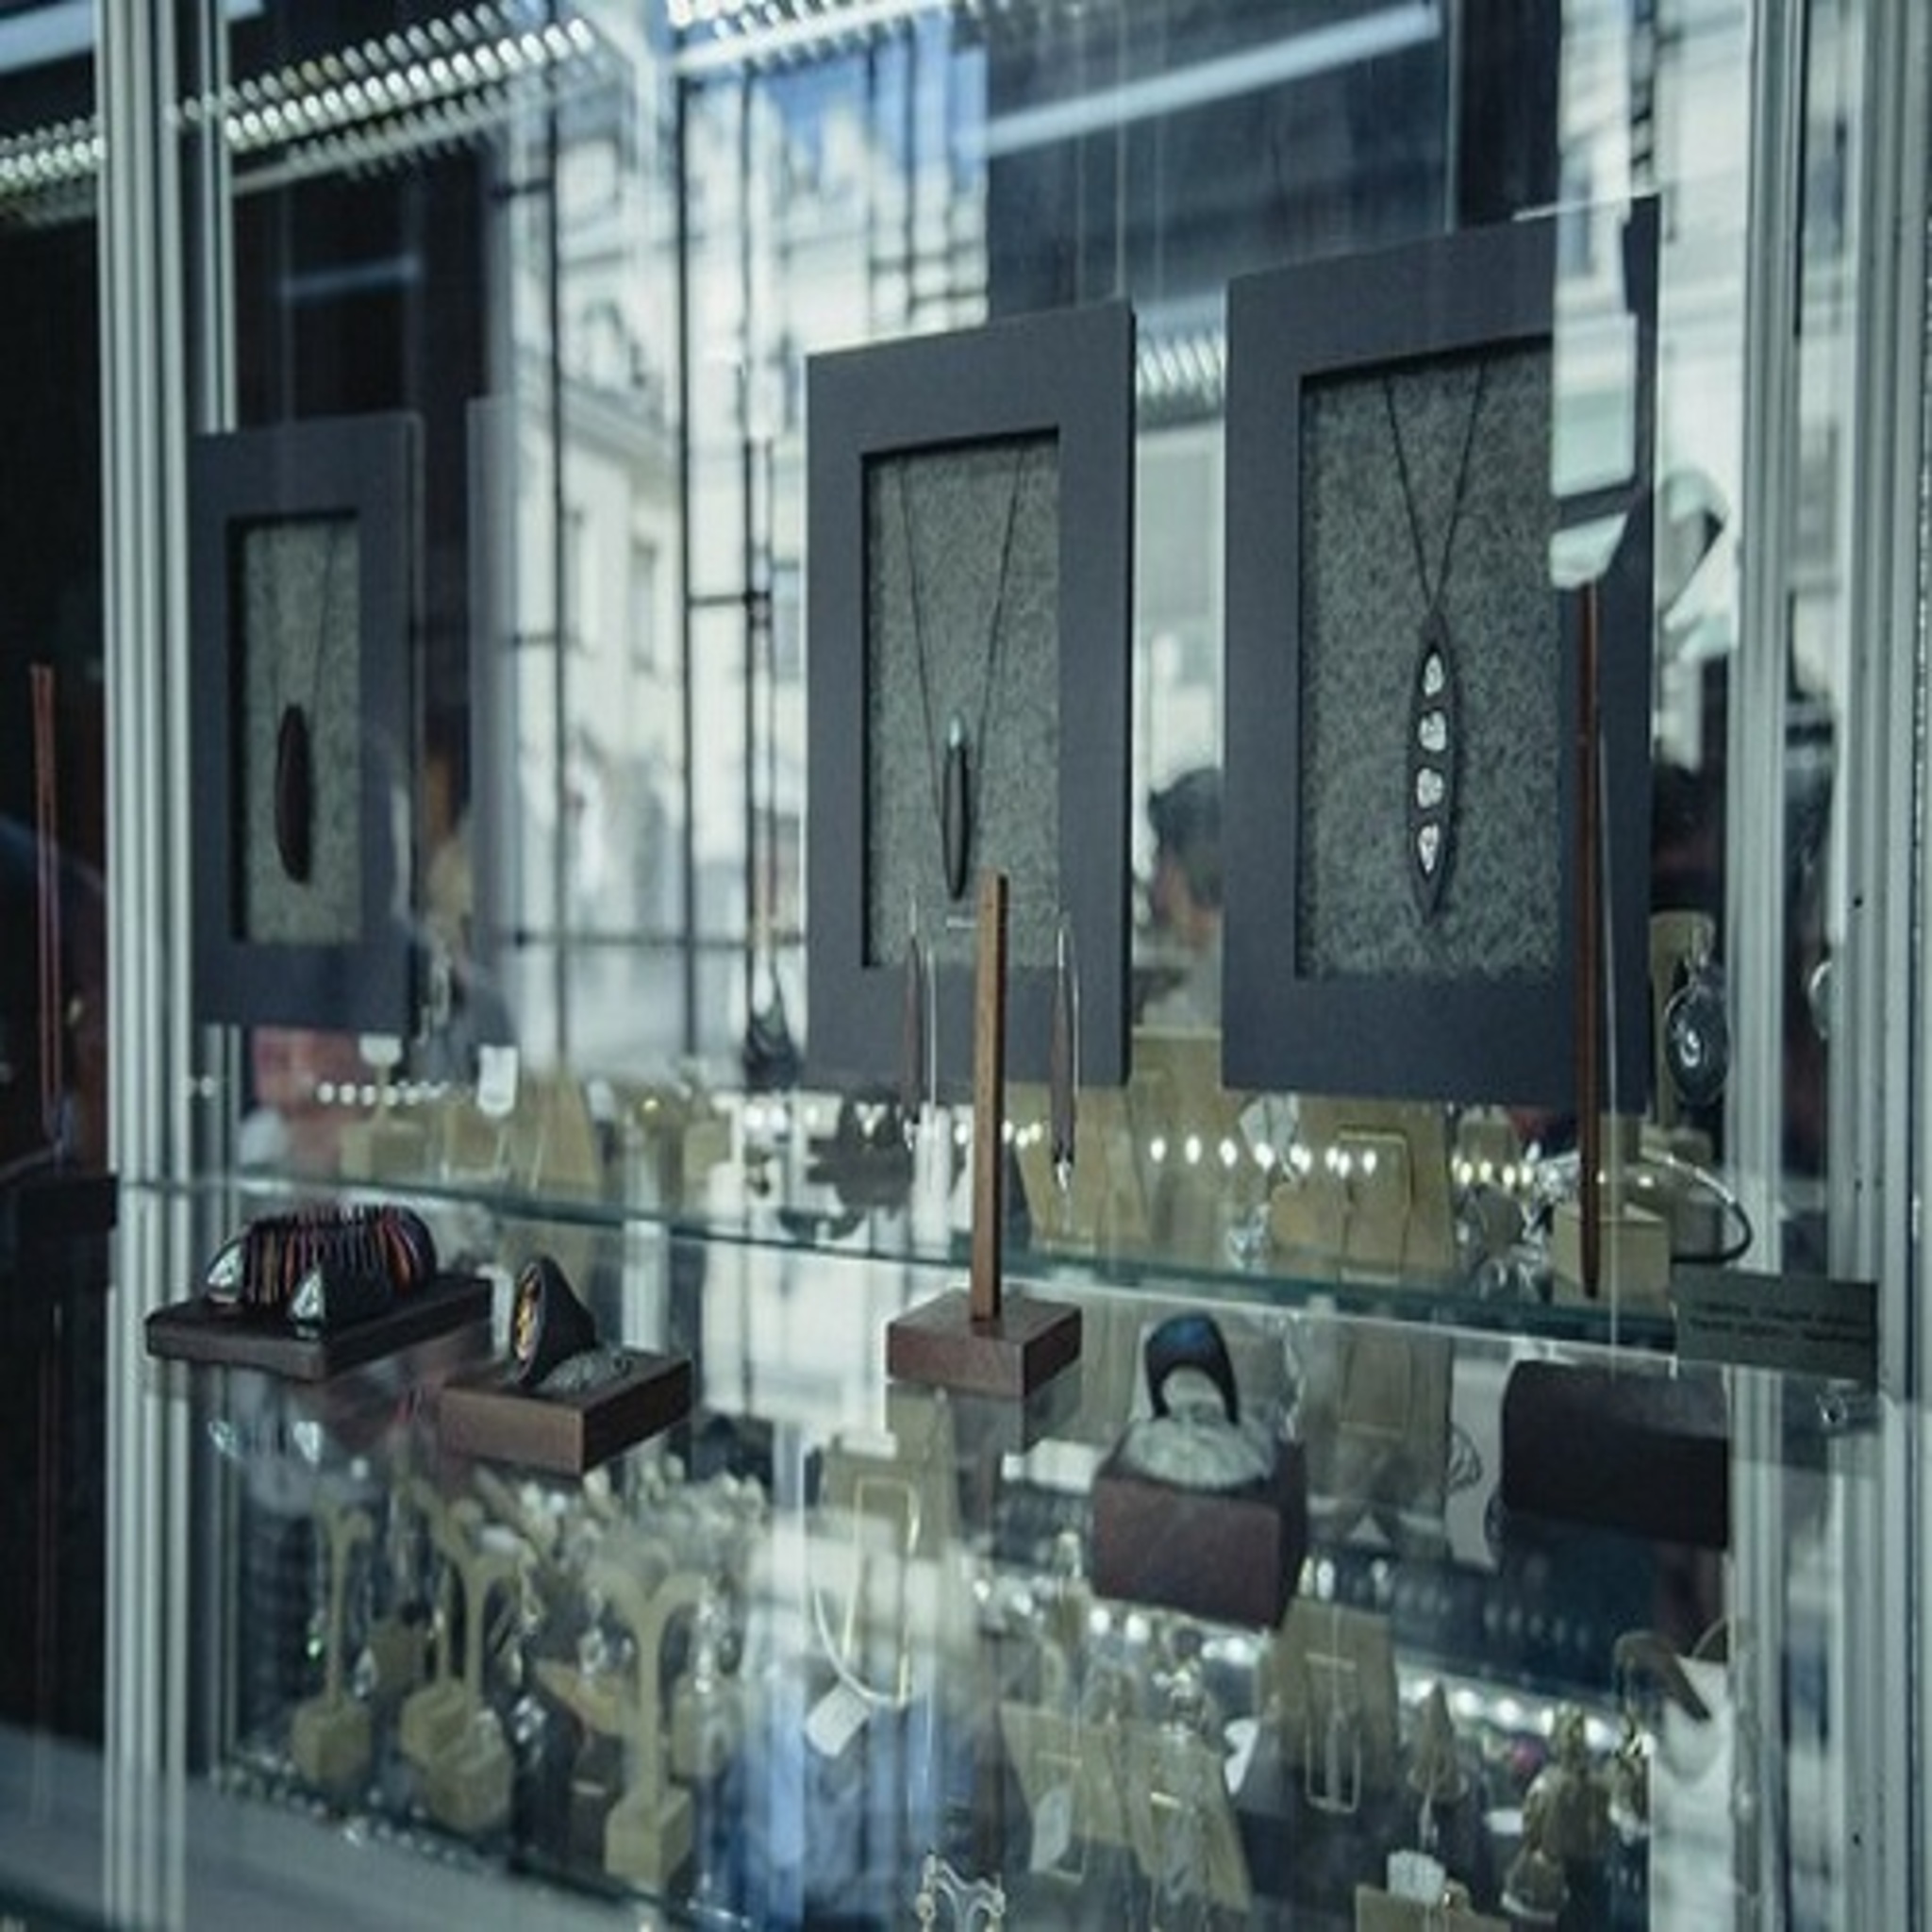 The exhibition – sale of Treasures of St. Petersburg